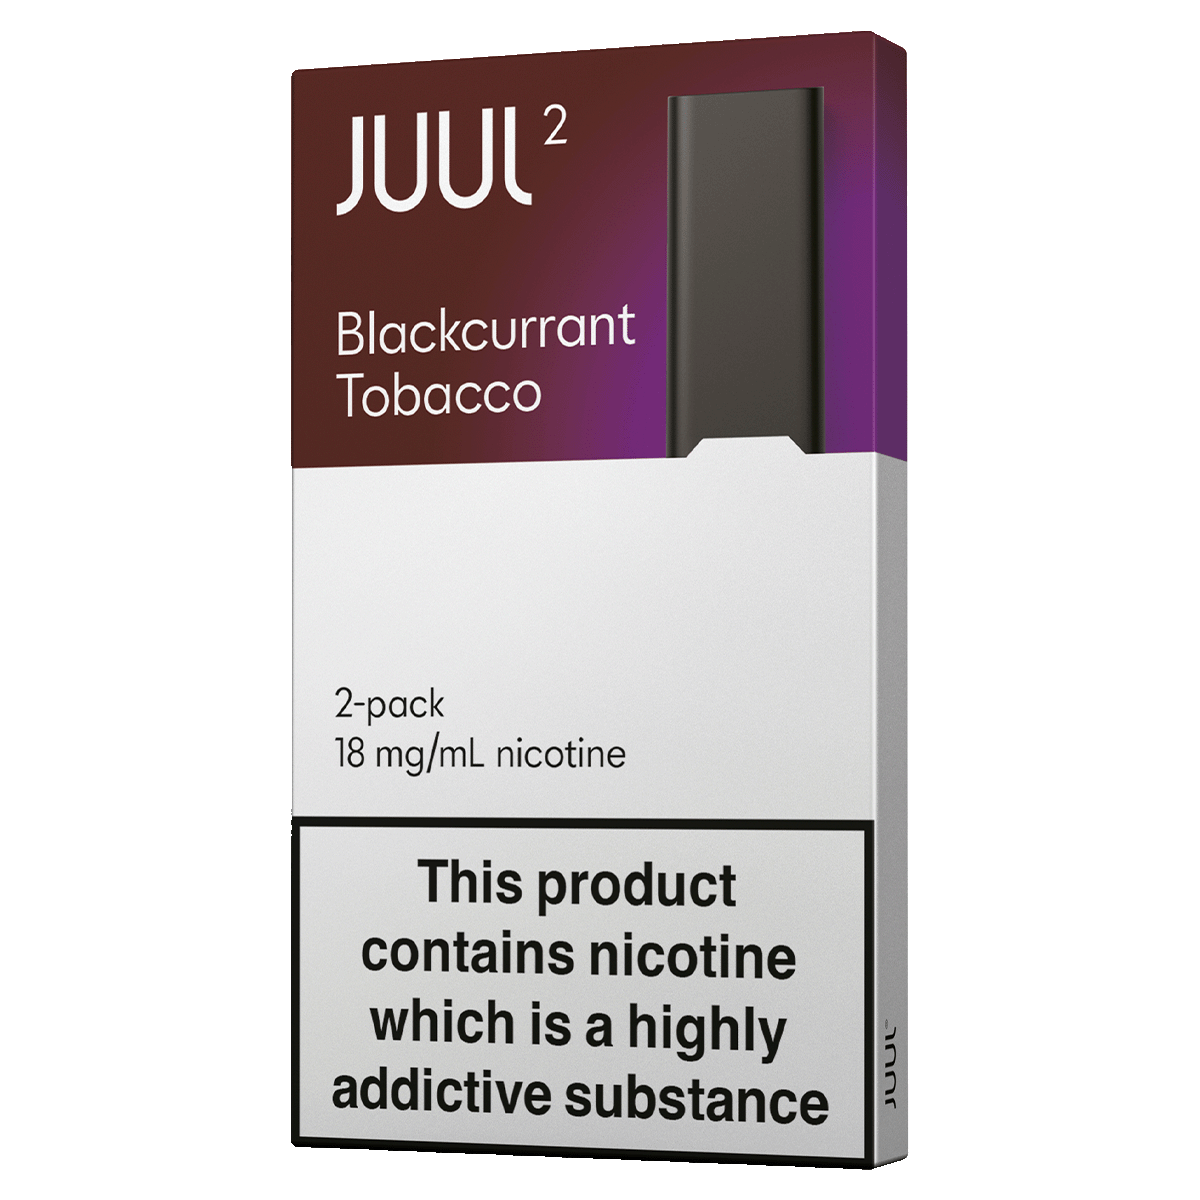 JUUL2 Blackcurrant Tobacco (Pack of 2)